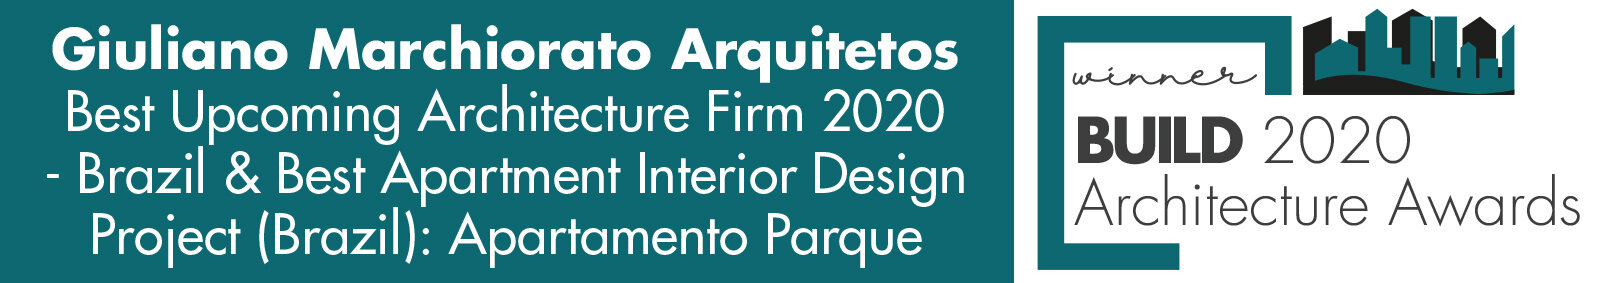 AWJun20254 - Giuliano Marchiorato Arquitetos Winners Logo.jpg